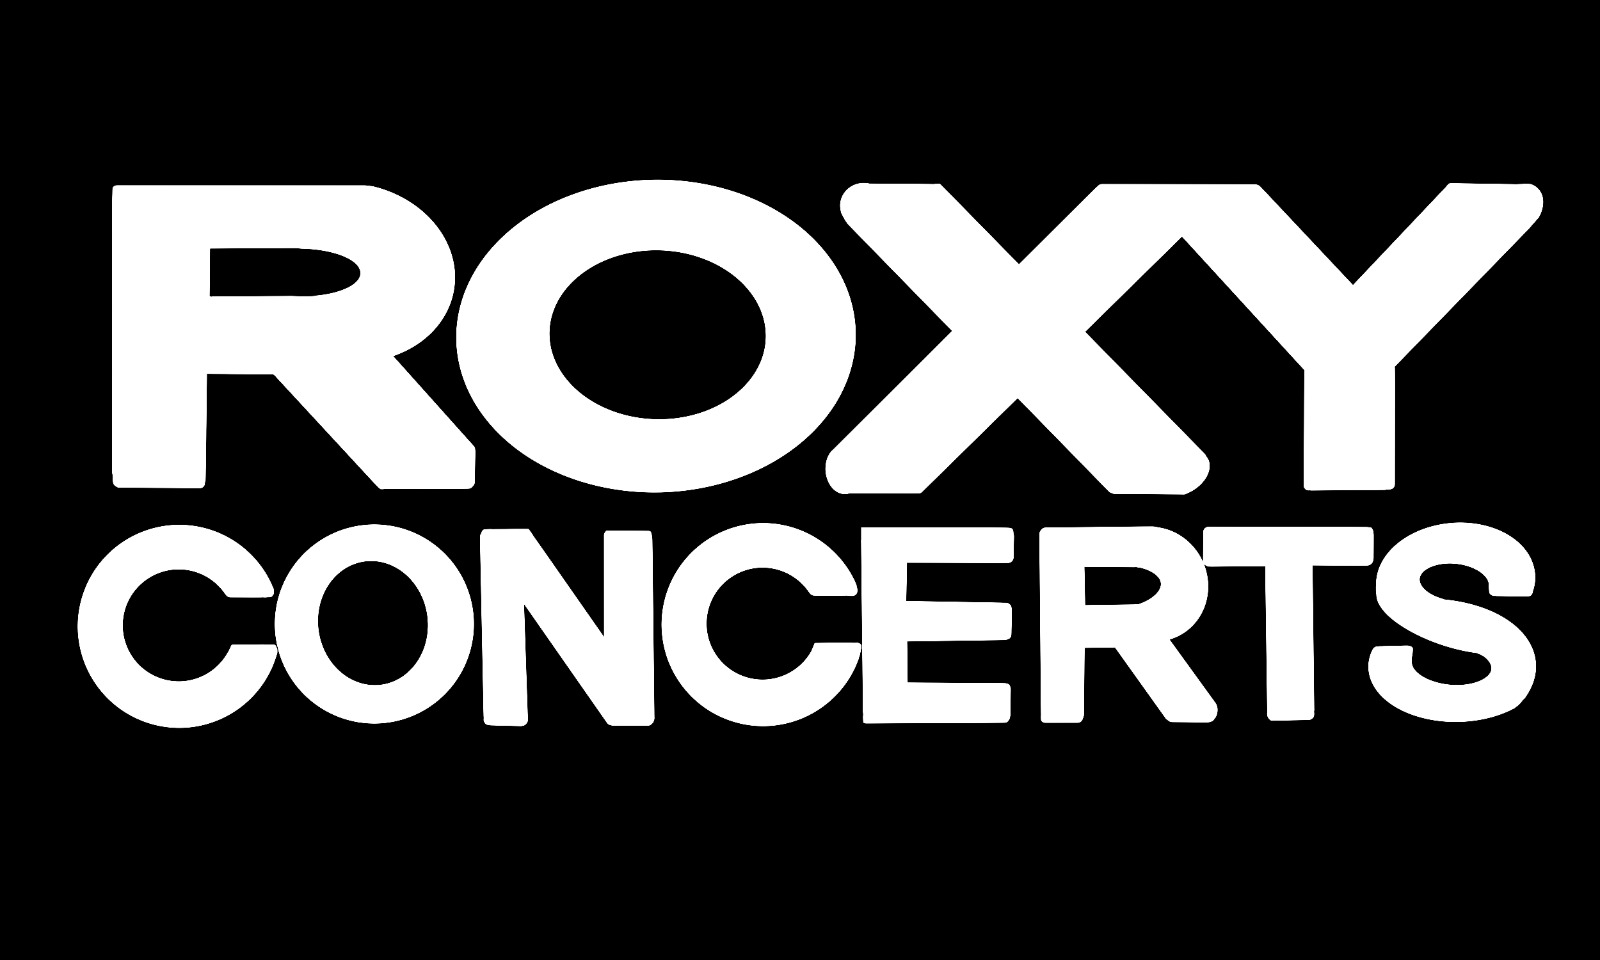 Roxy Concerts